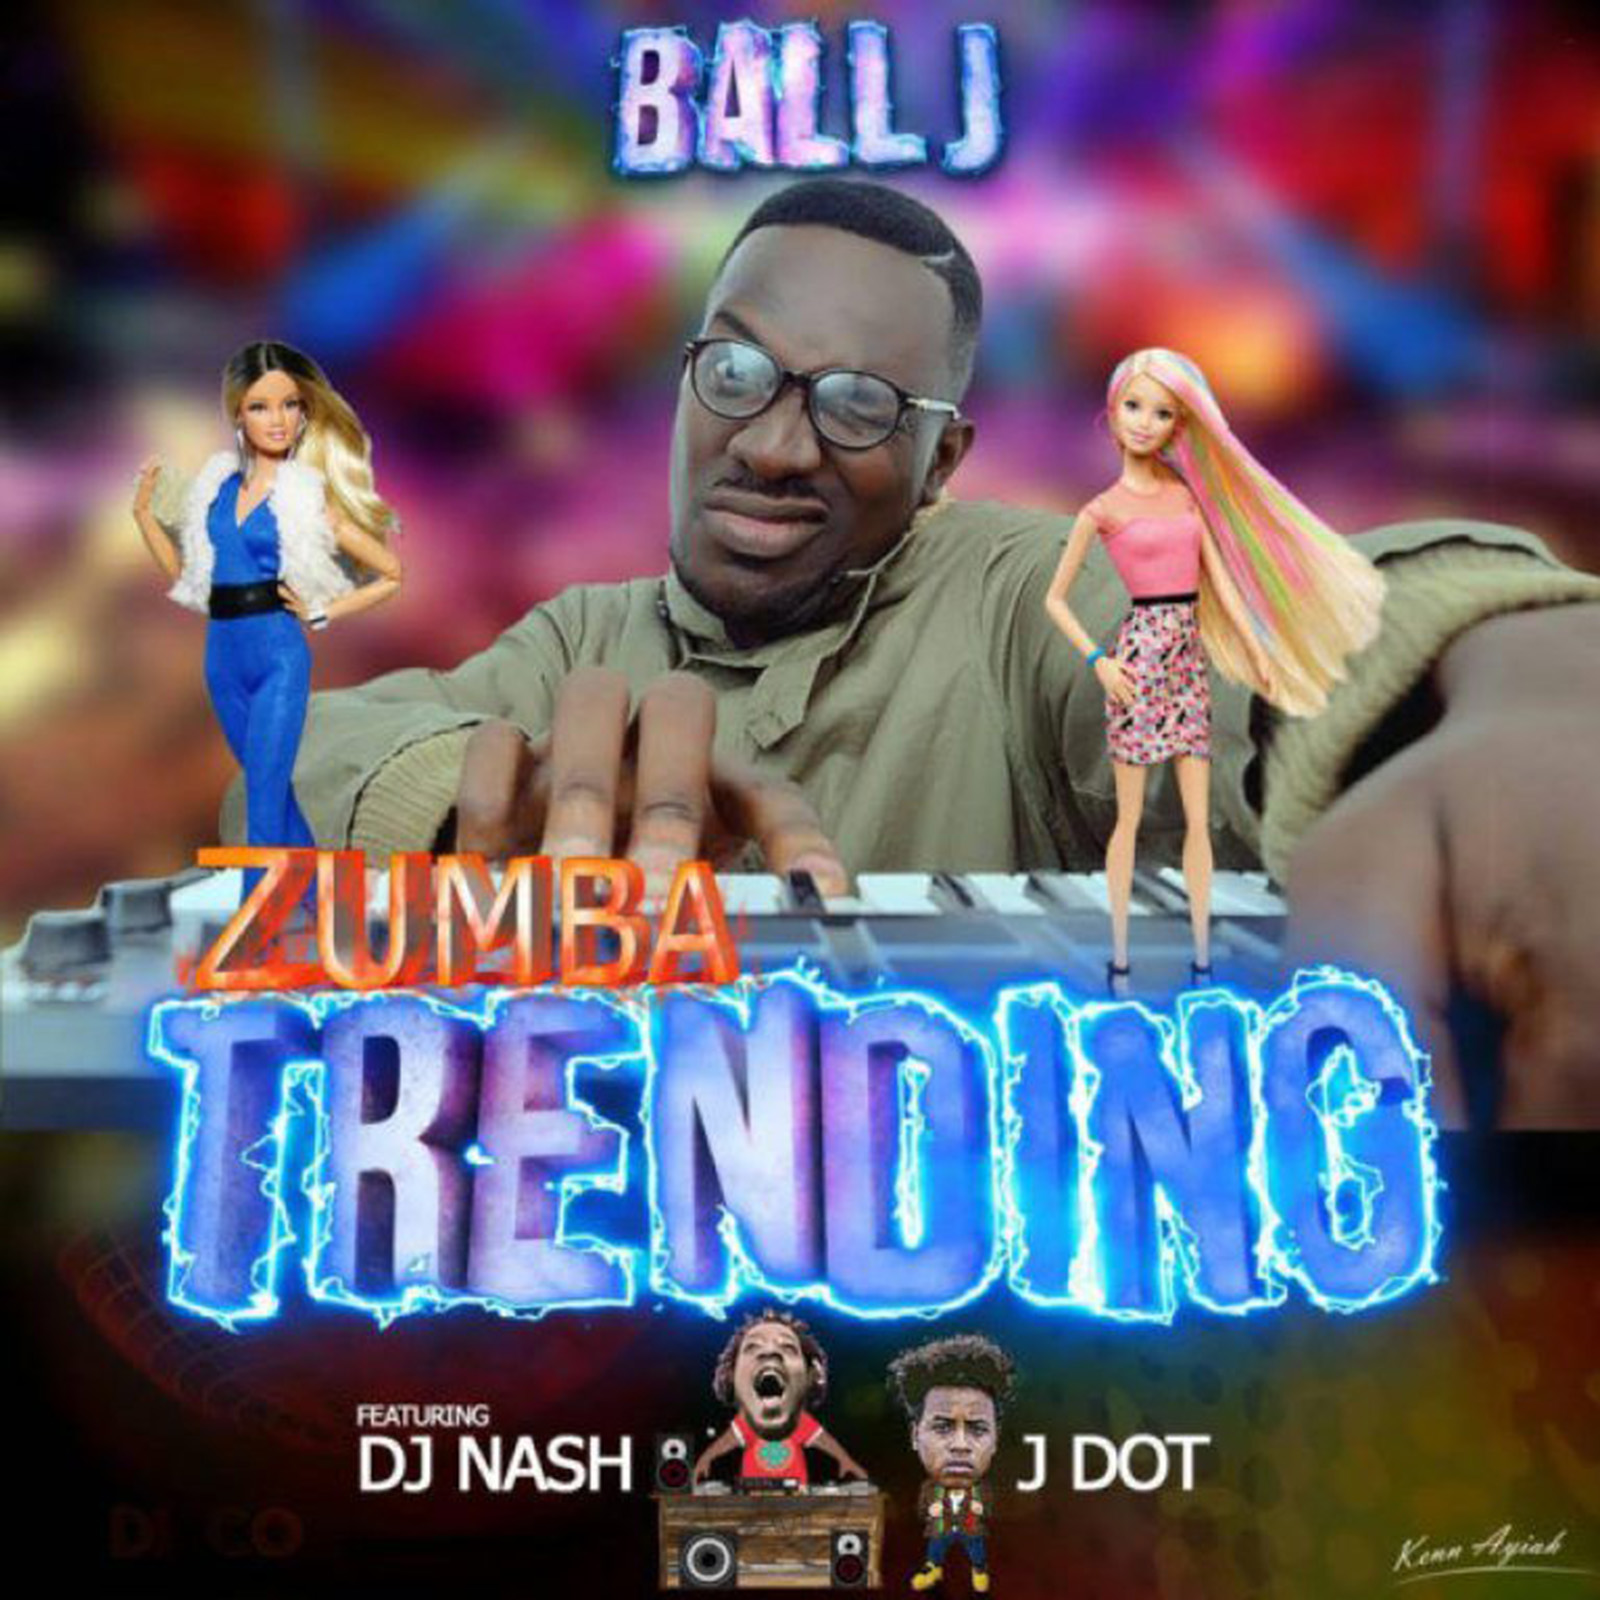 Zumba Trending by Ball J feat. DJ Nash & J Dot